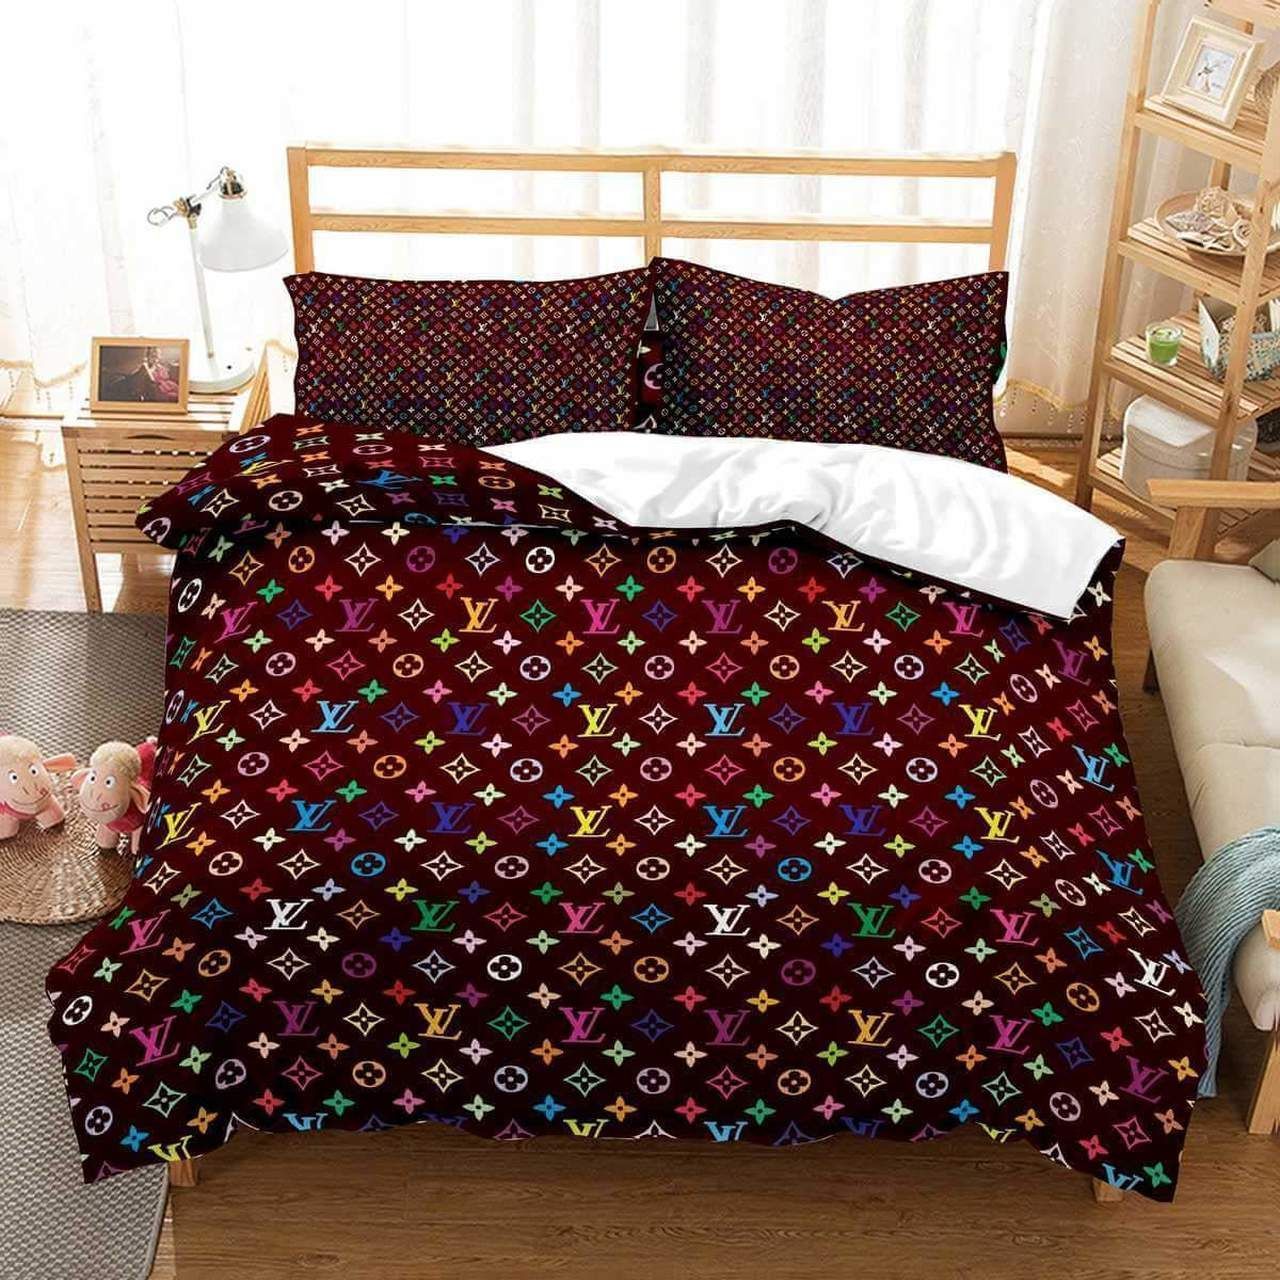 Duvet Covers and Pillow Case set - Louis vuitton 25 3d personalized bedding sets duvet cover bedroom sets bedset bedlinen - set 3 pcs (1 duvet cover + 2 pillowcases) / full